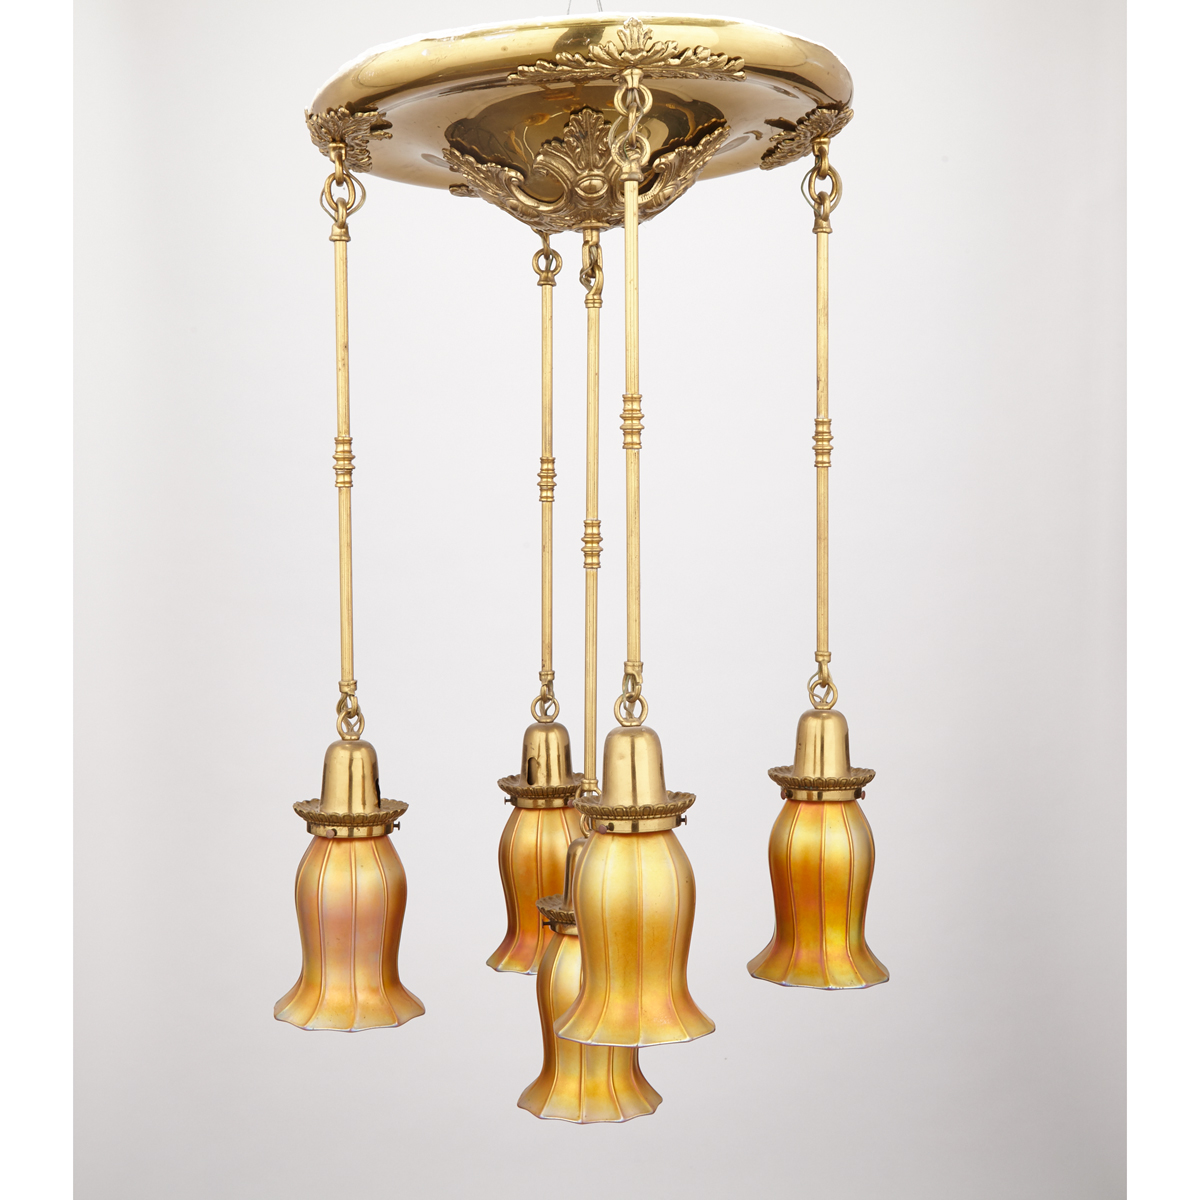 Art Nouveau Lacquered Brass FIve Light Chandelier with Quezal Glass Shades, c.1890